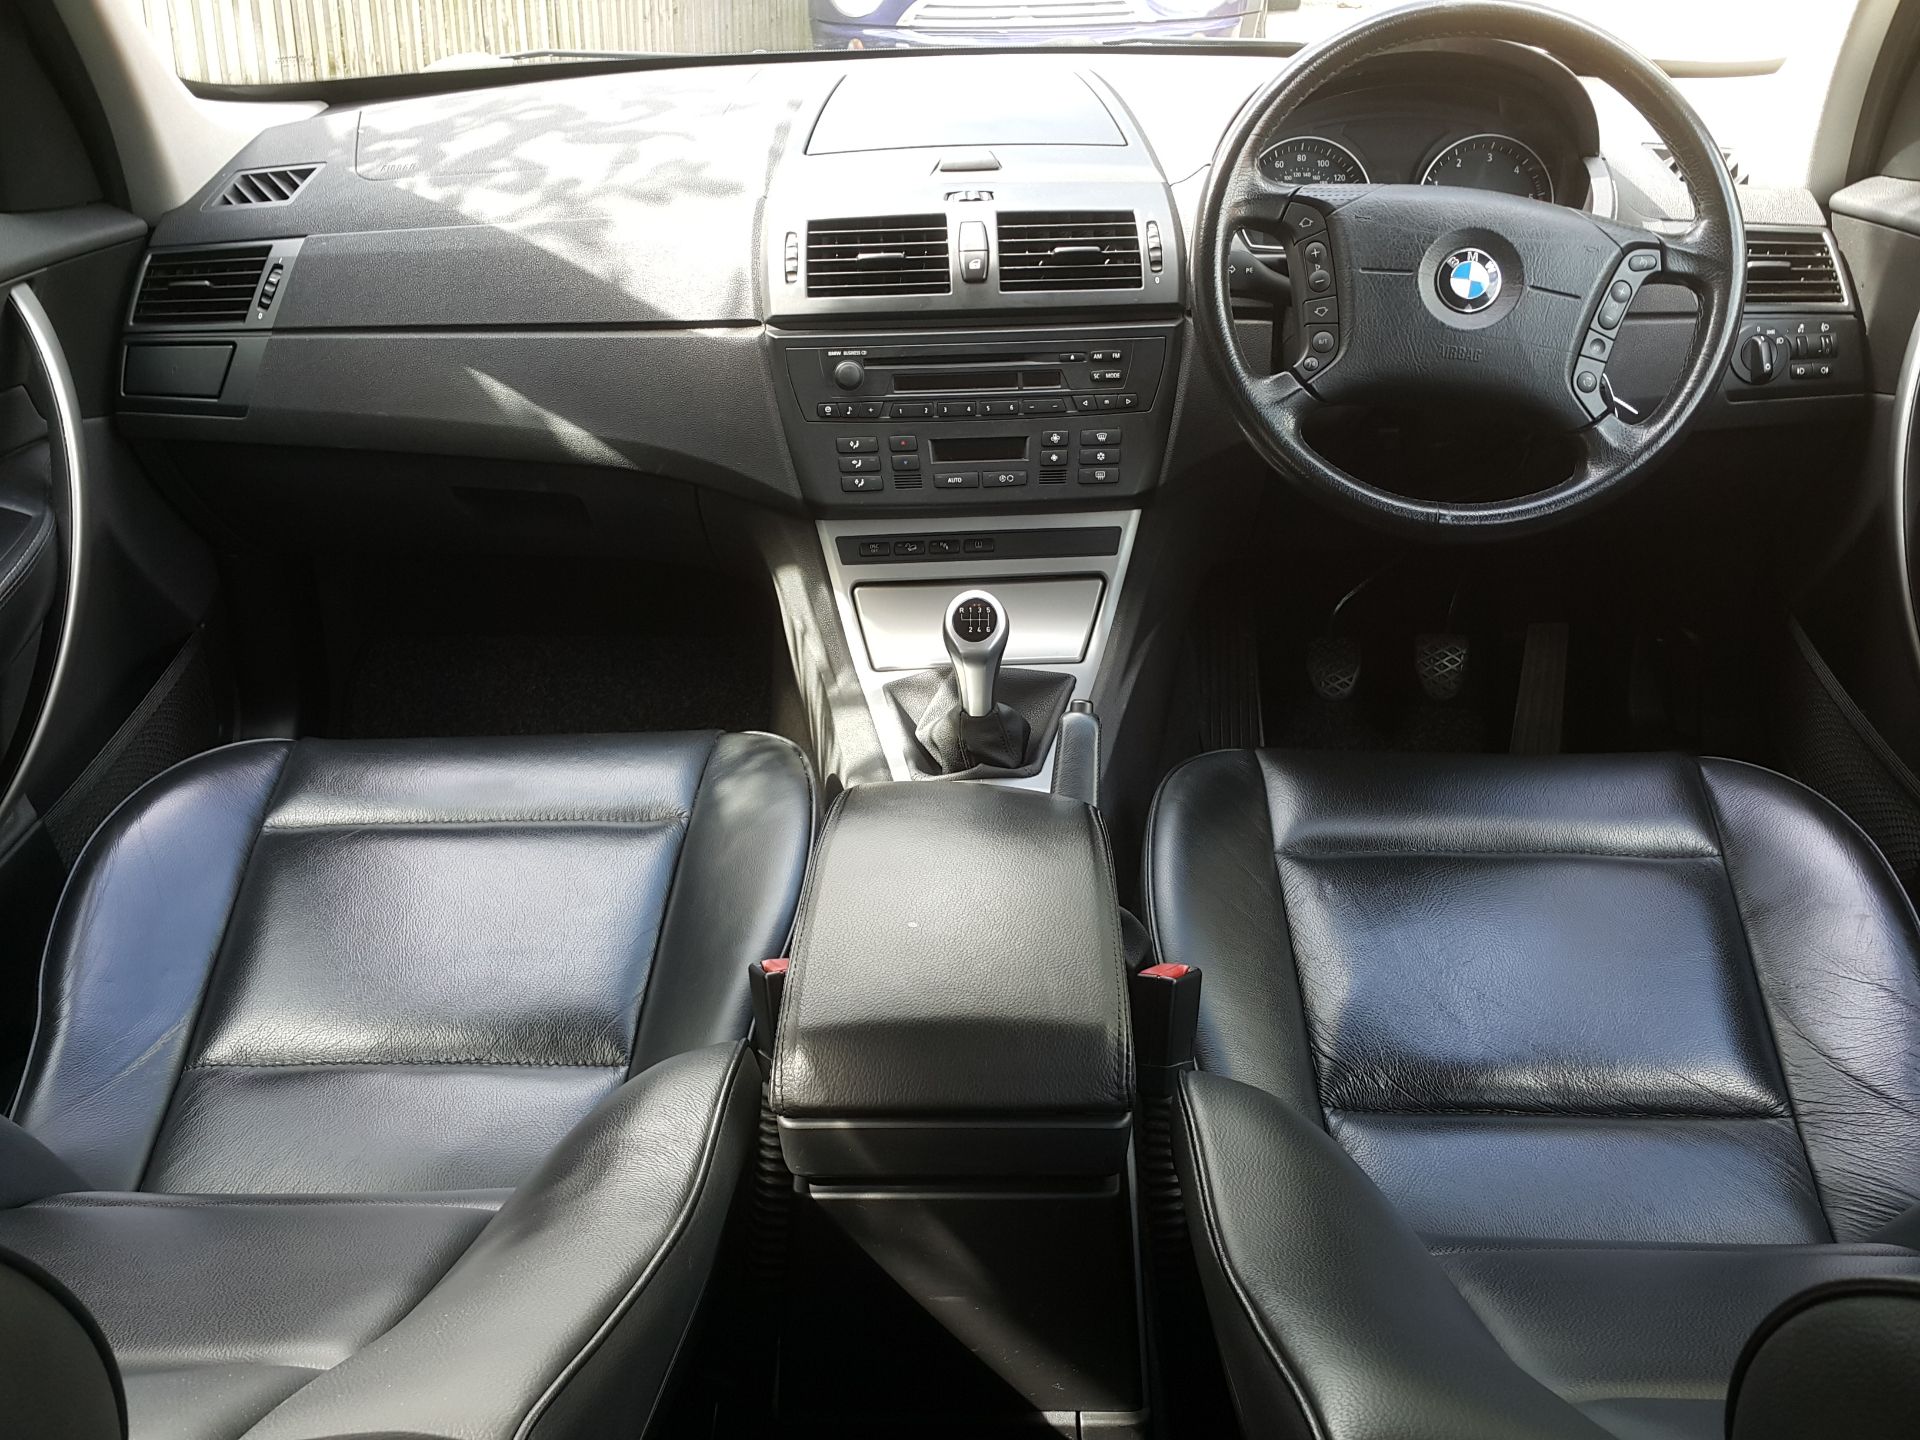 BMW X3 SE '05 REG 4X4 - Image 9 of 17